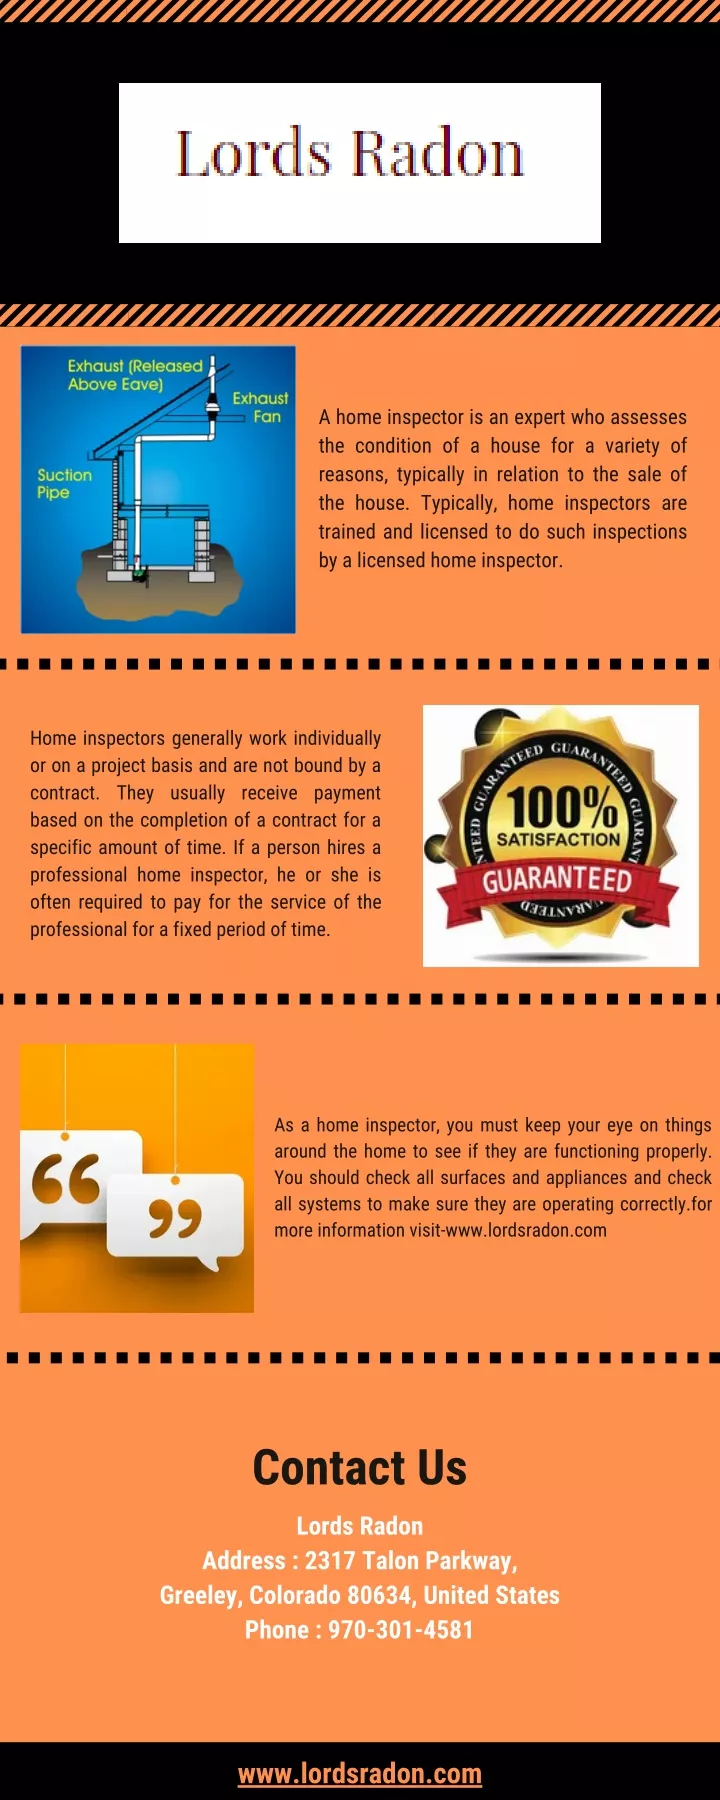 a home inspector is an expert who assesses